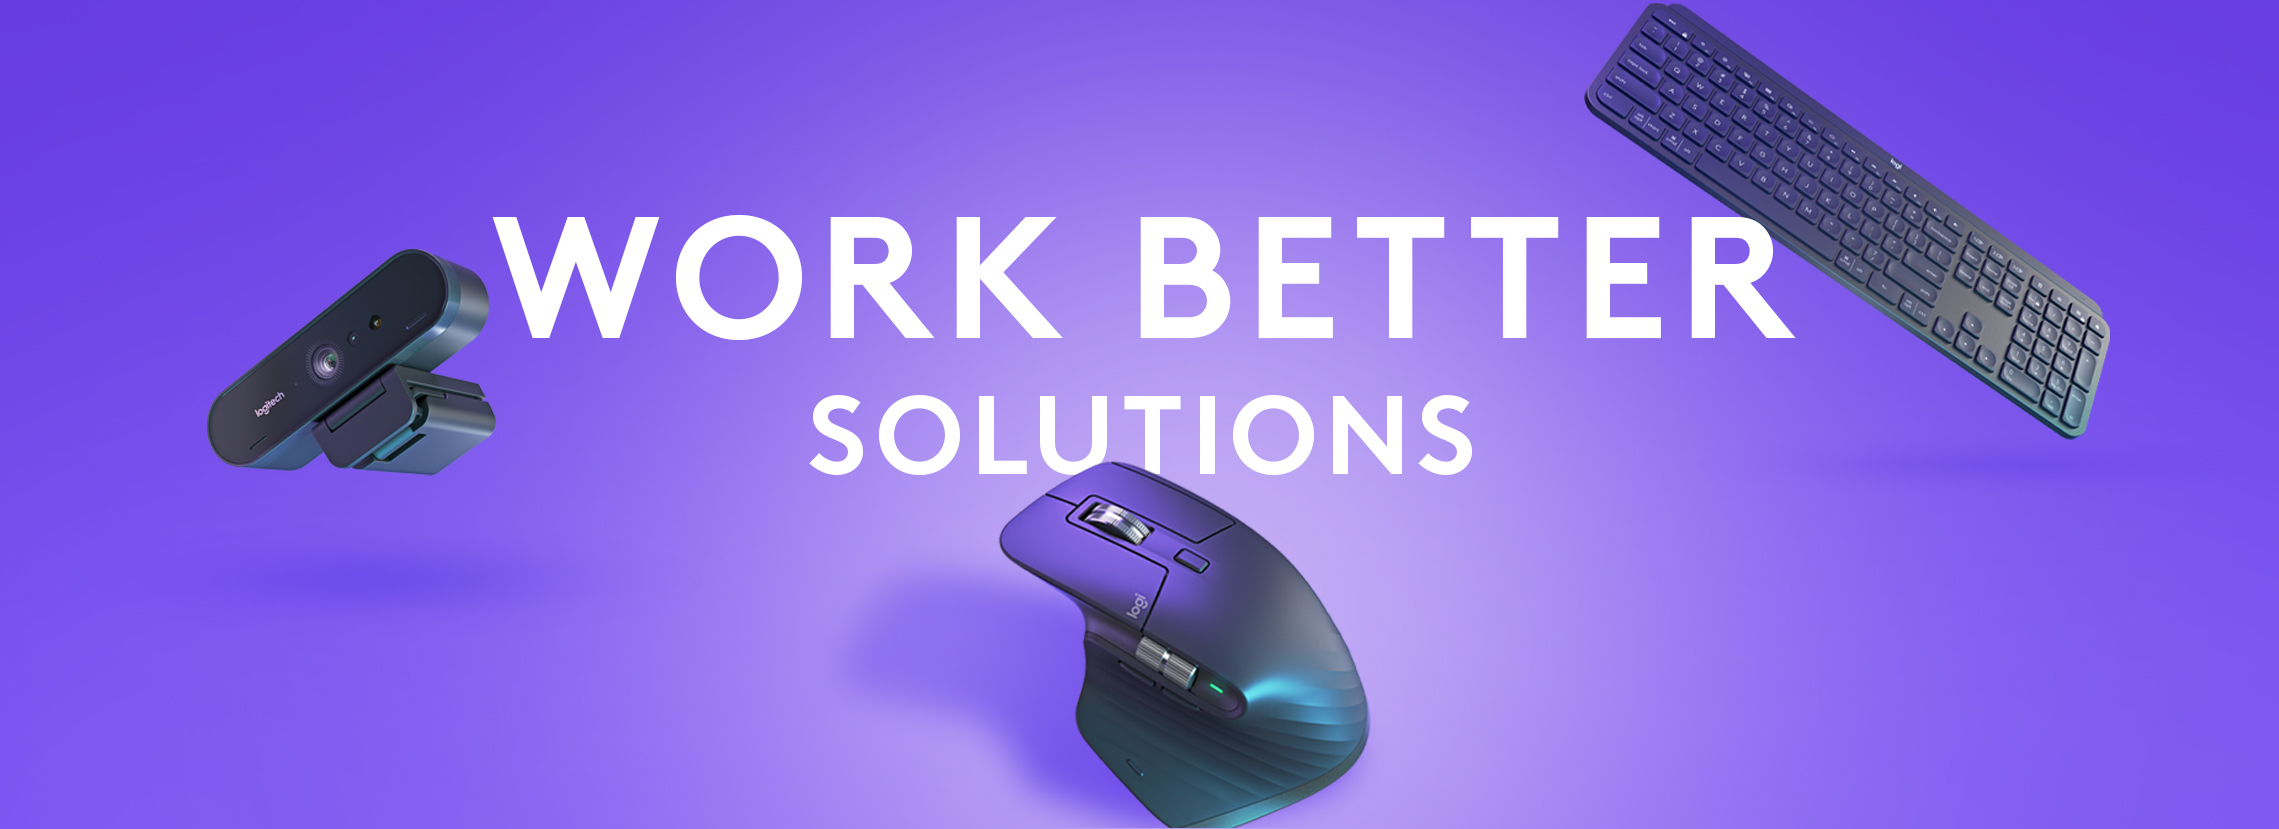 work better solutions banner